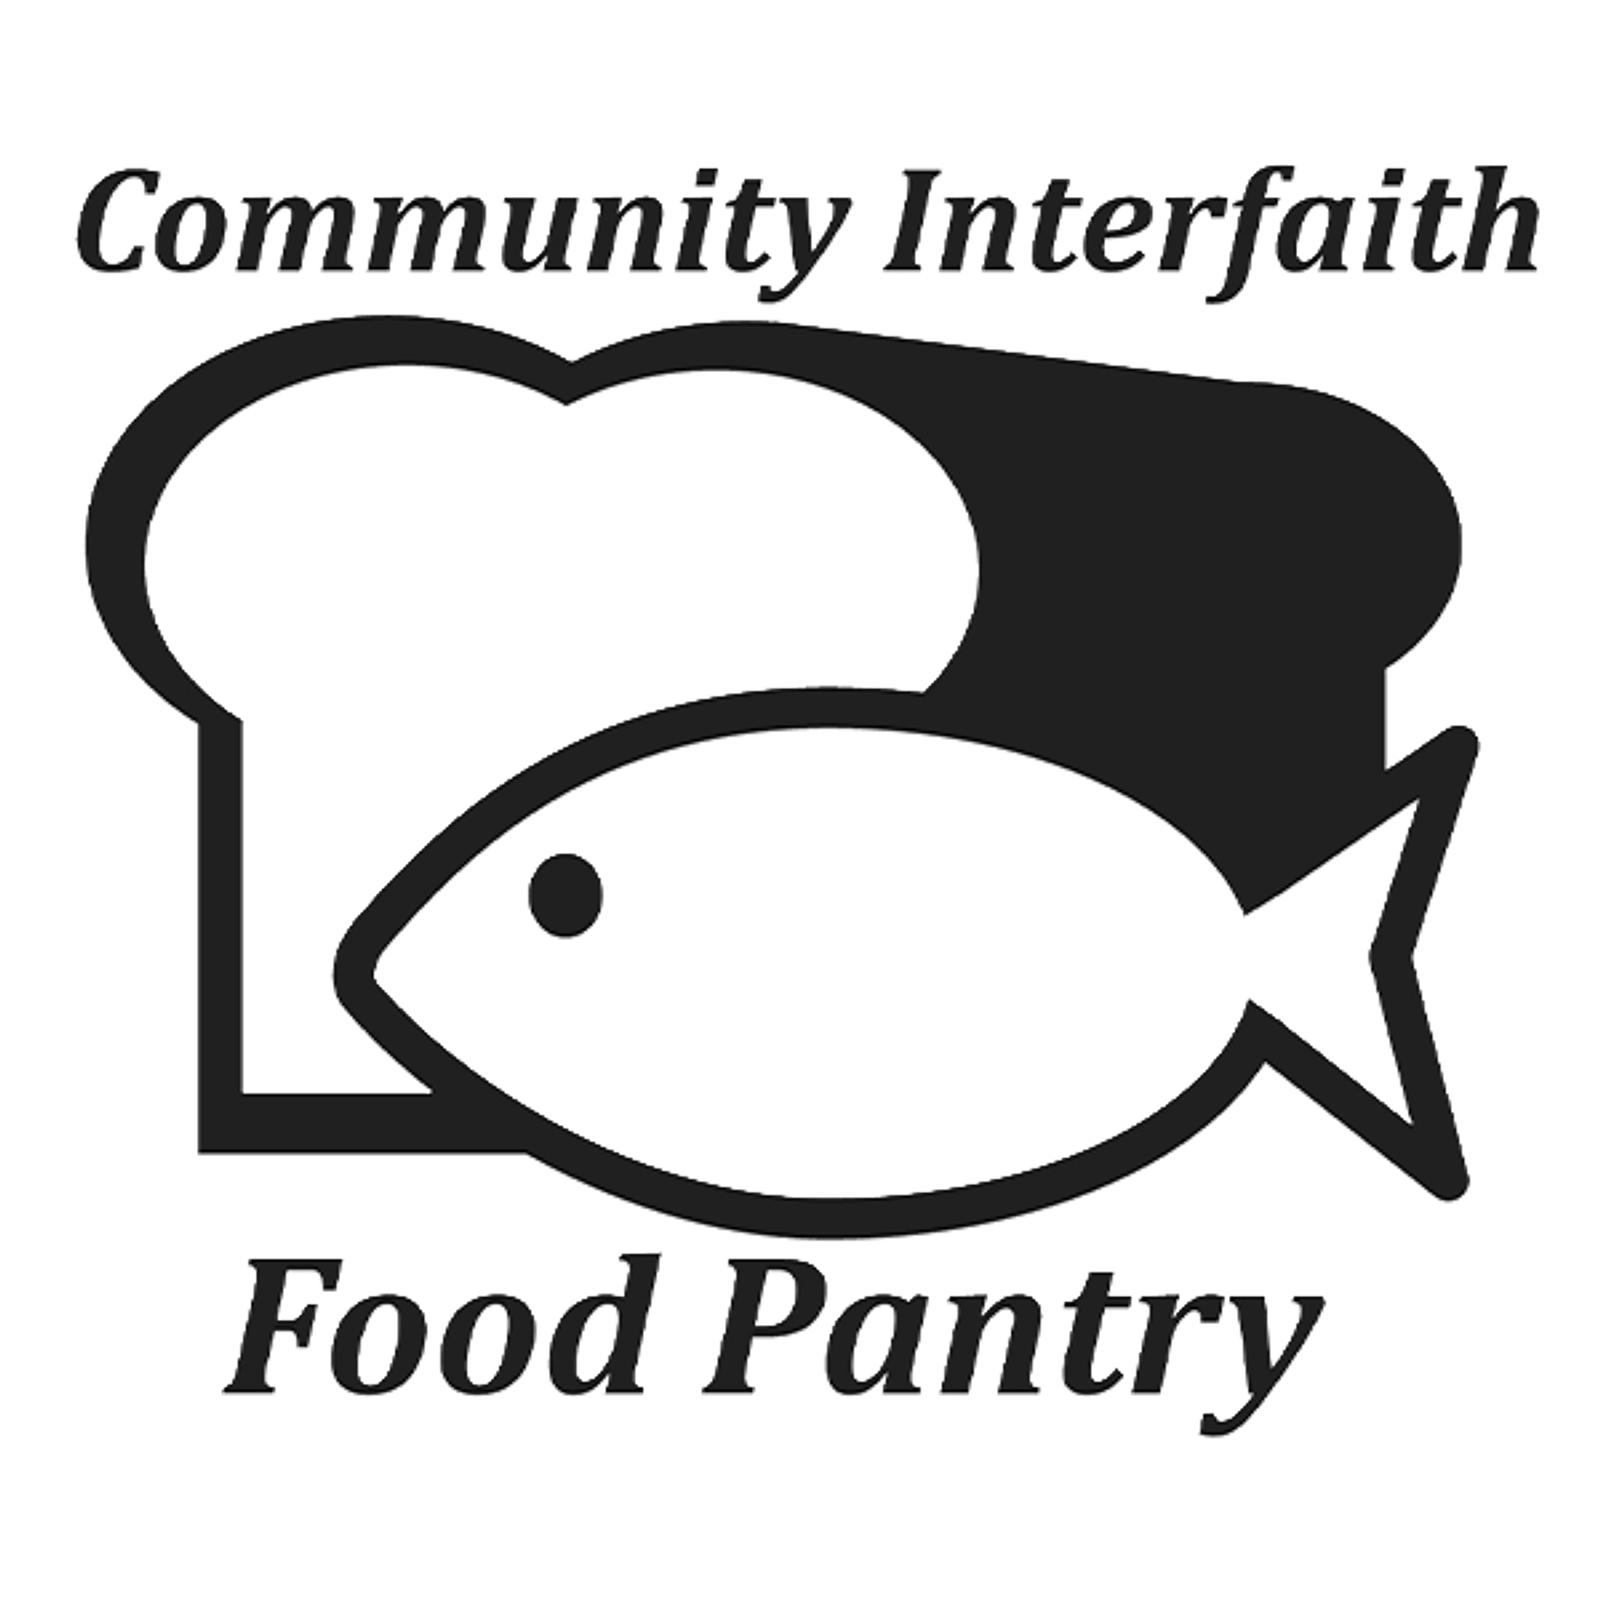 Community Interfaith Food Pantry